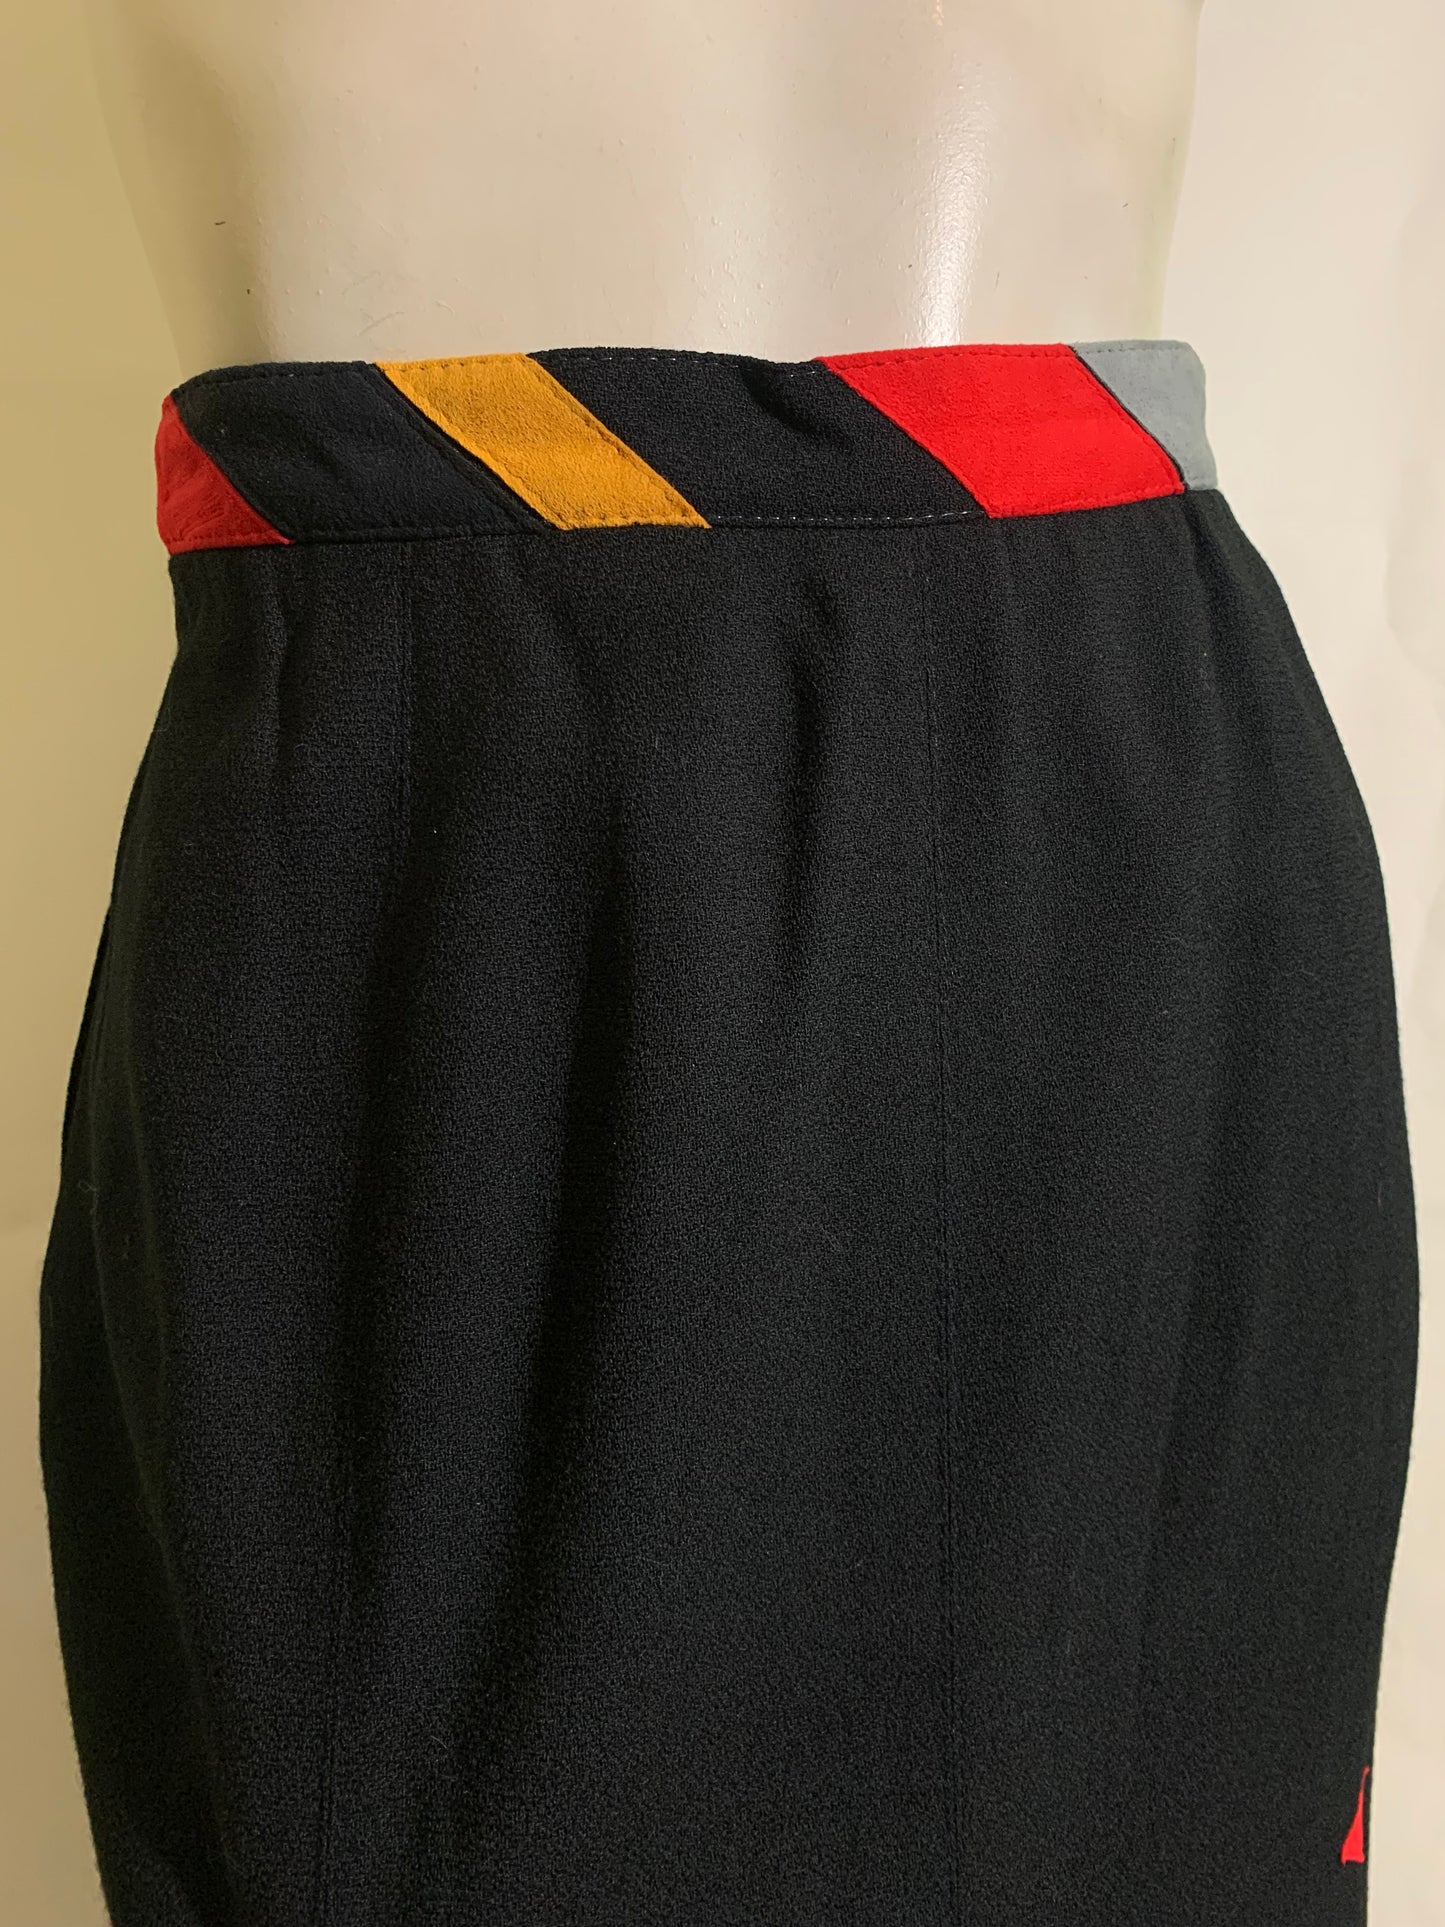 Black Wool Pencil Skirt with Red Pleats Rainbow Ultraseude Trim circa 1980s